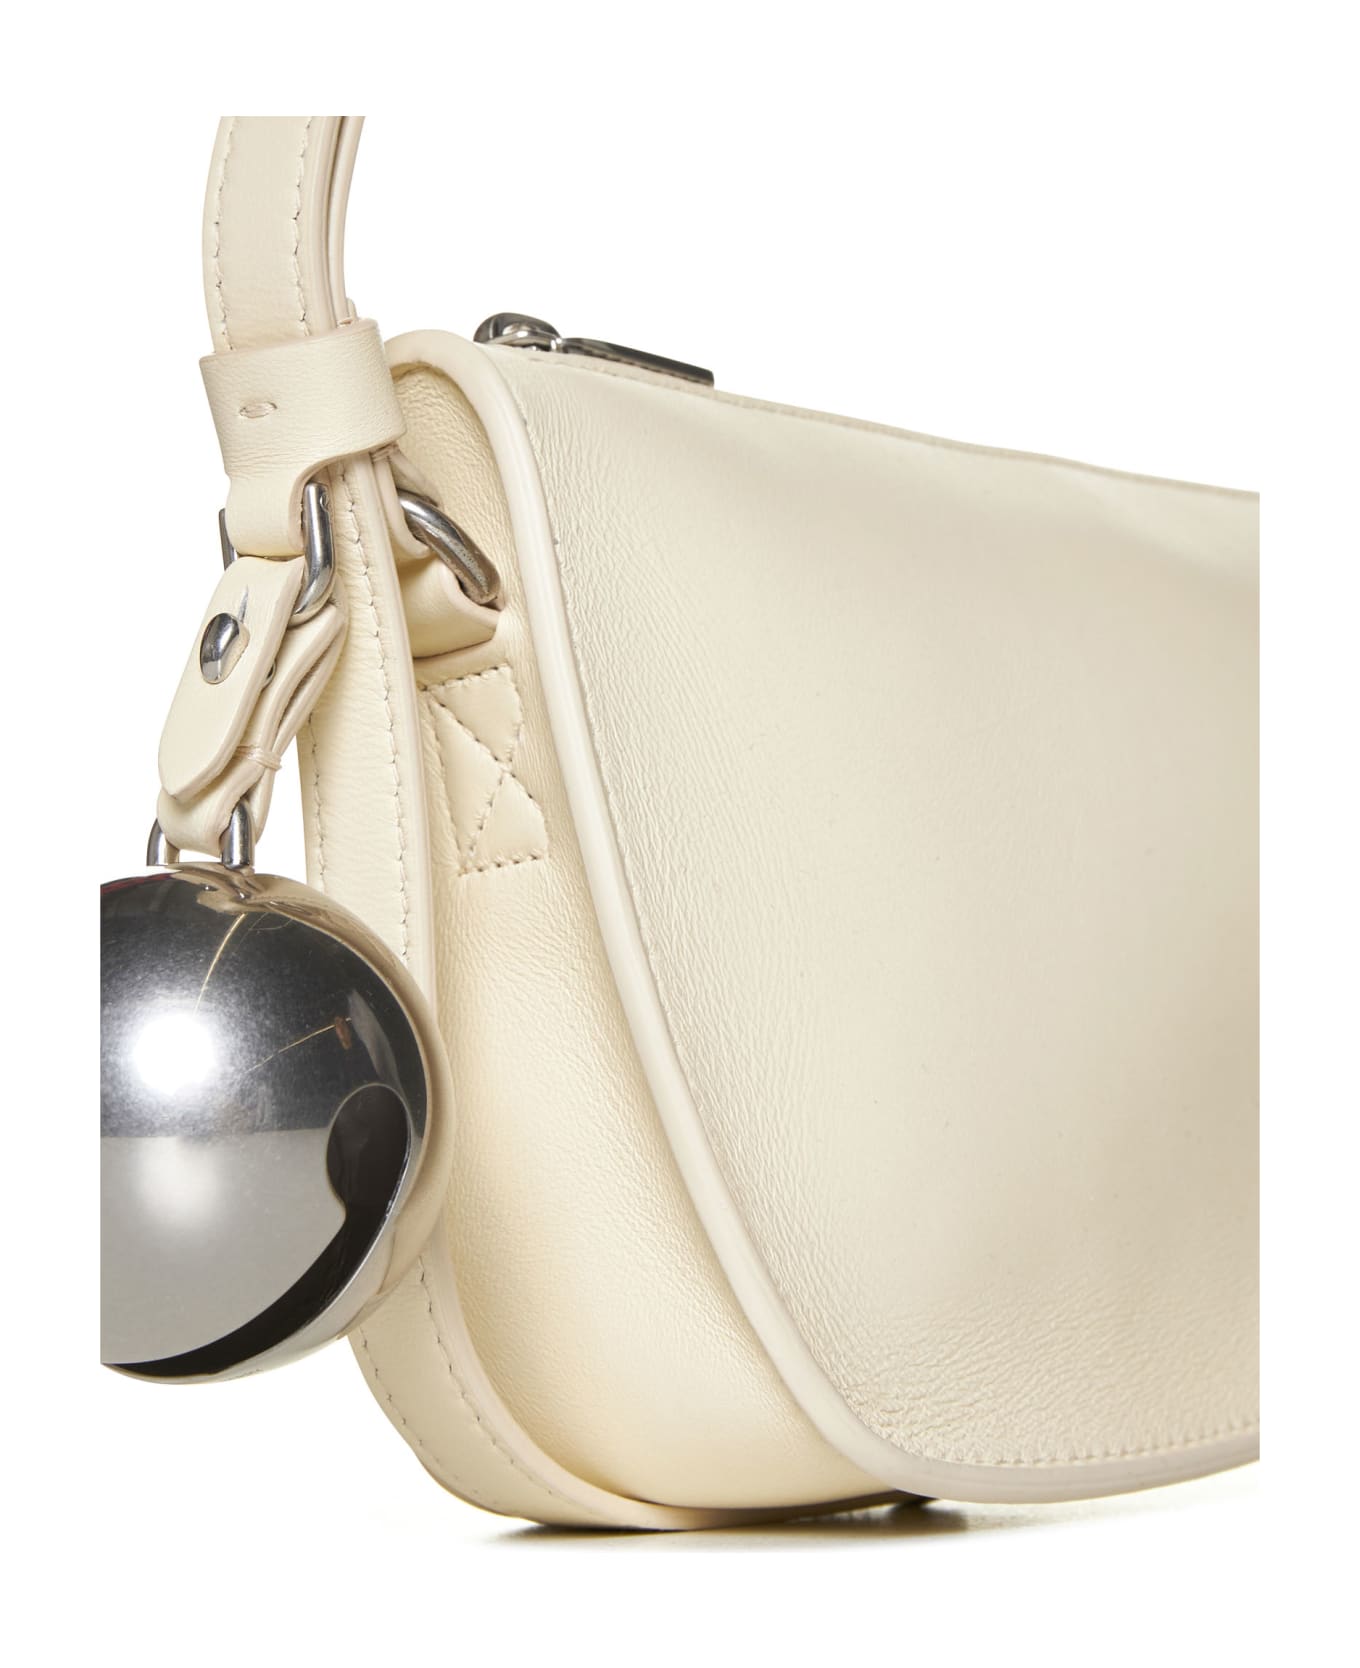 Burberry Shoulder Bag - Pearl